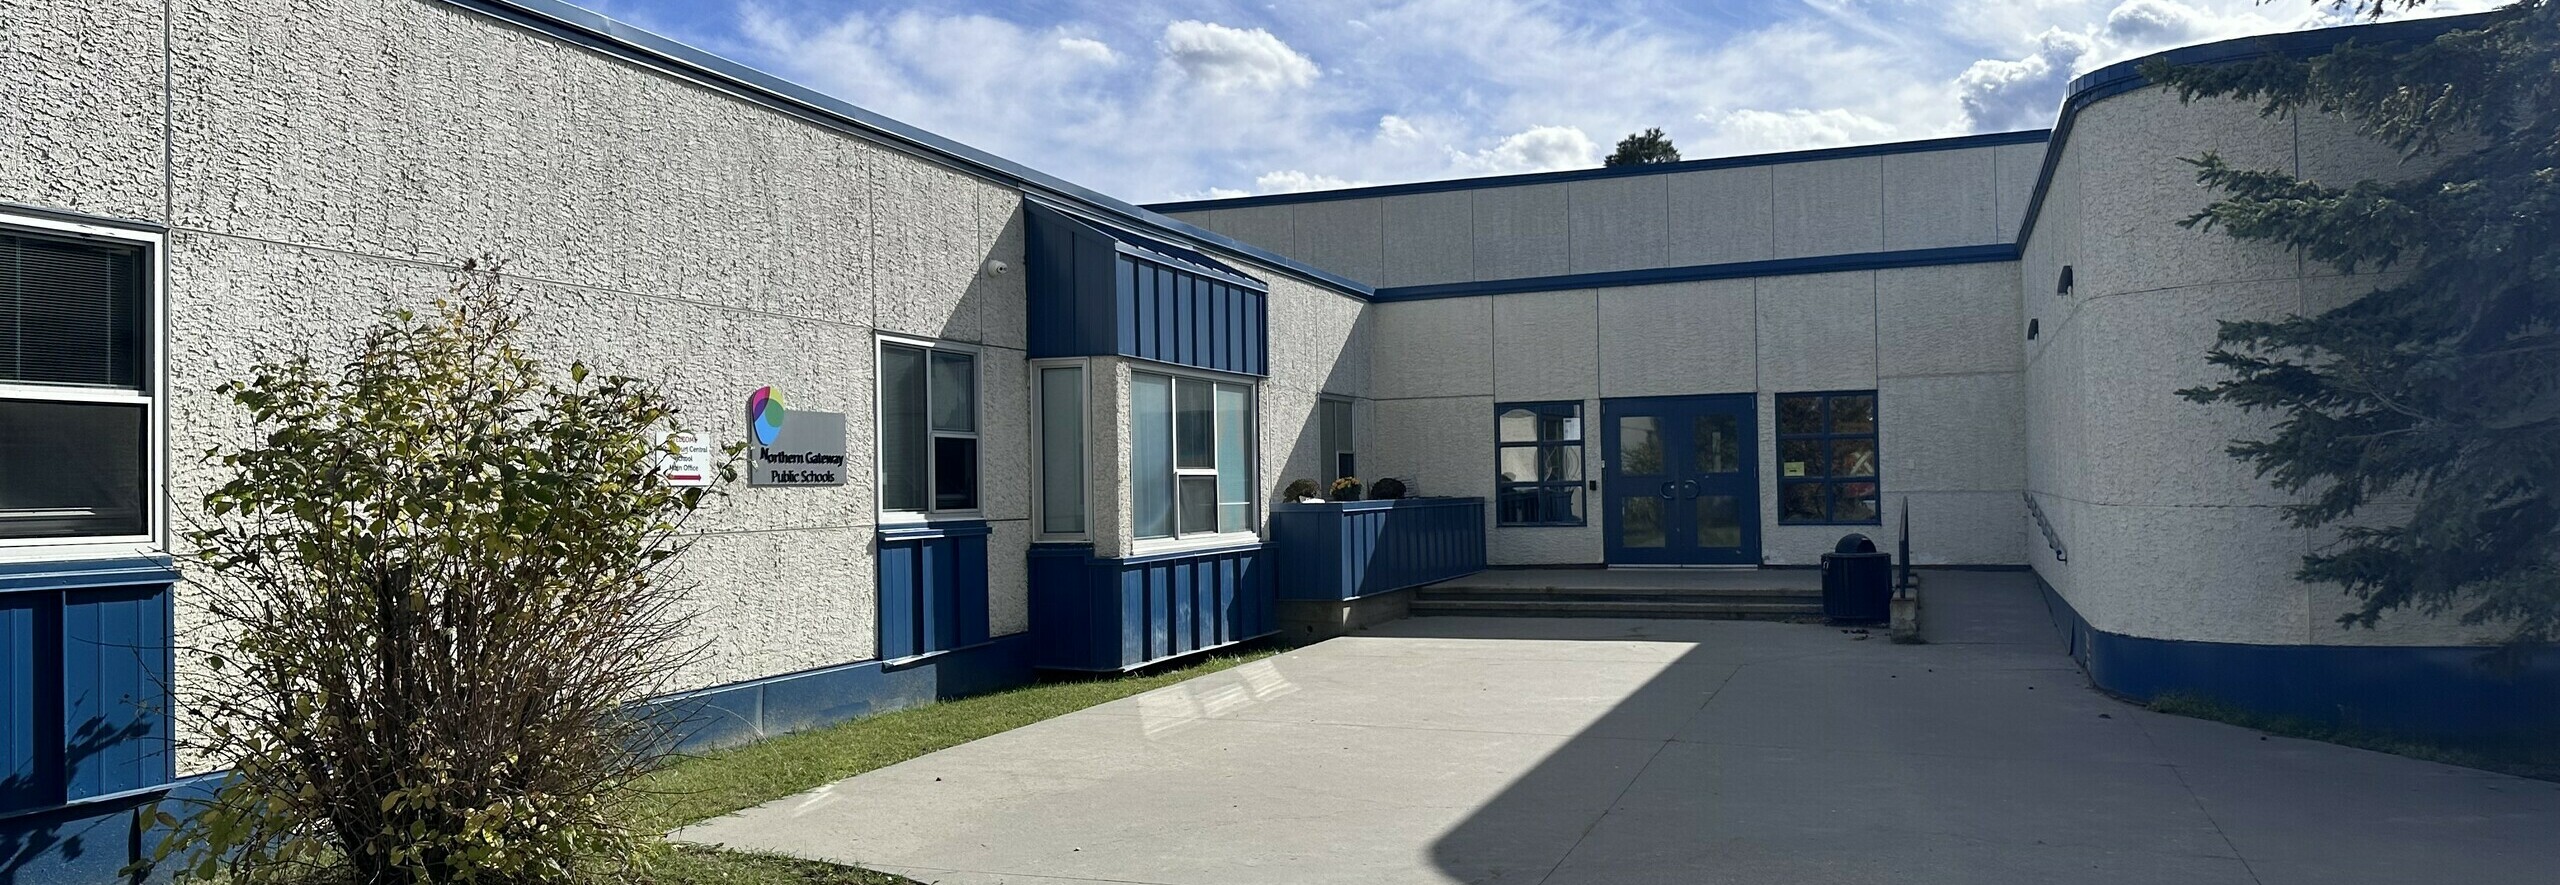 Whitecourt Central Elementary School Banner Photo